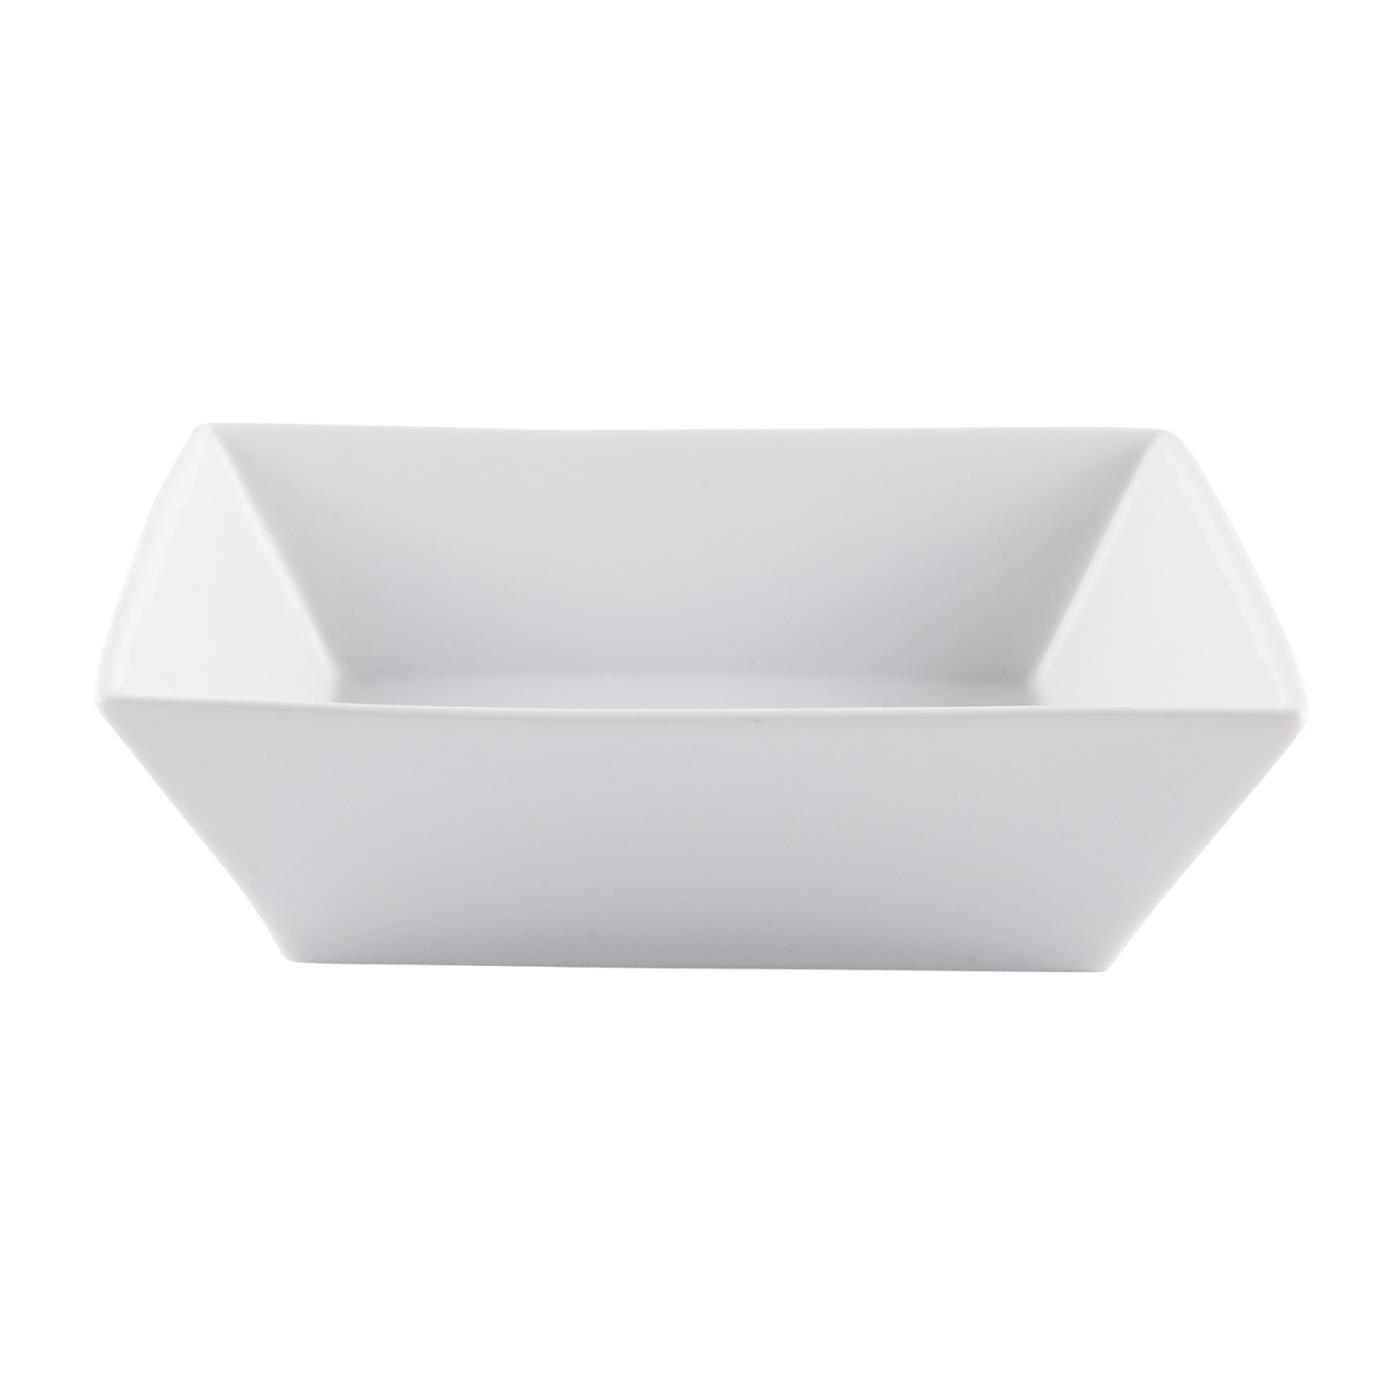 White Ceramic Square Bowl - 8"